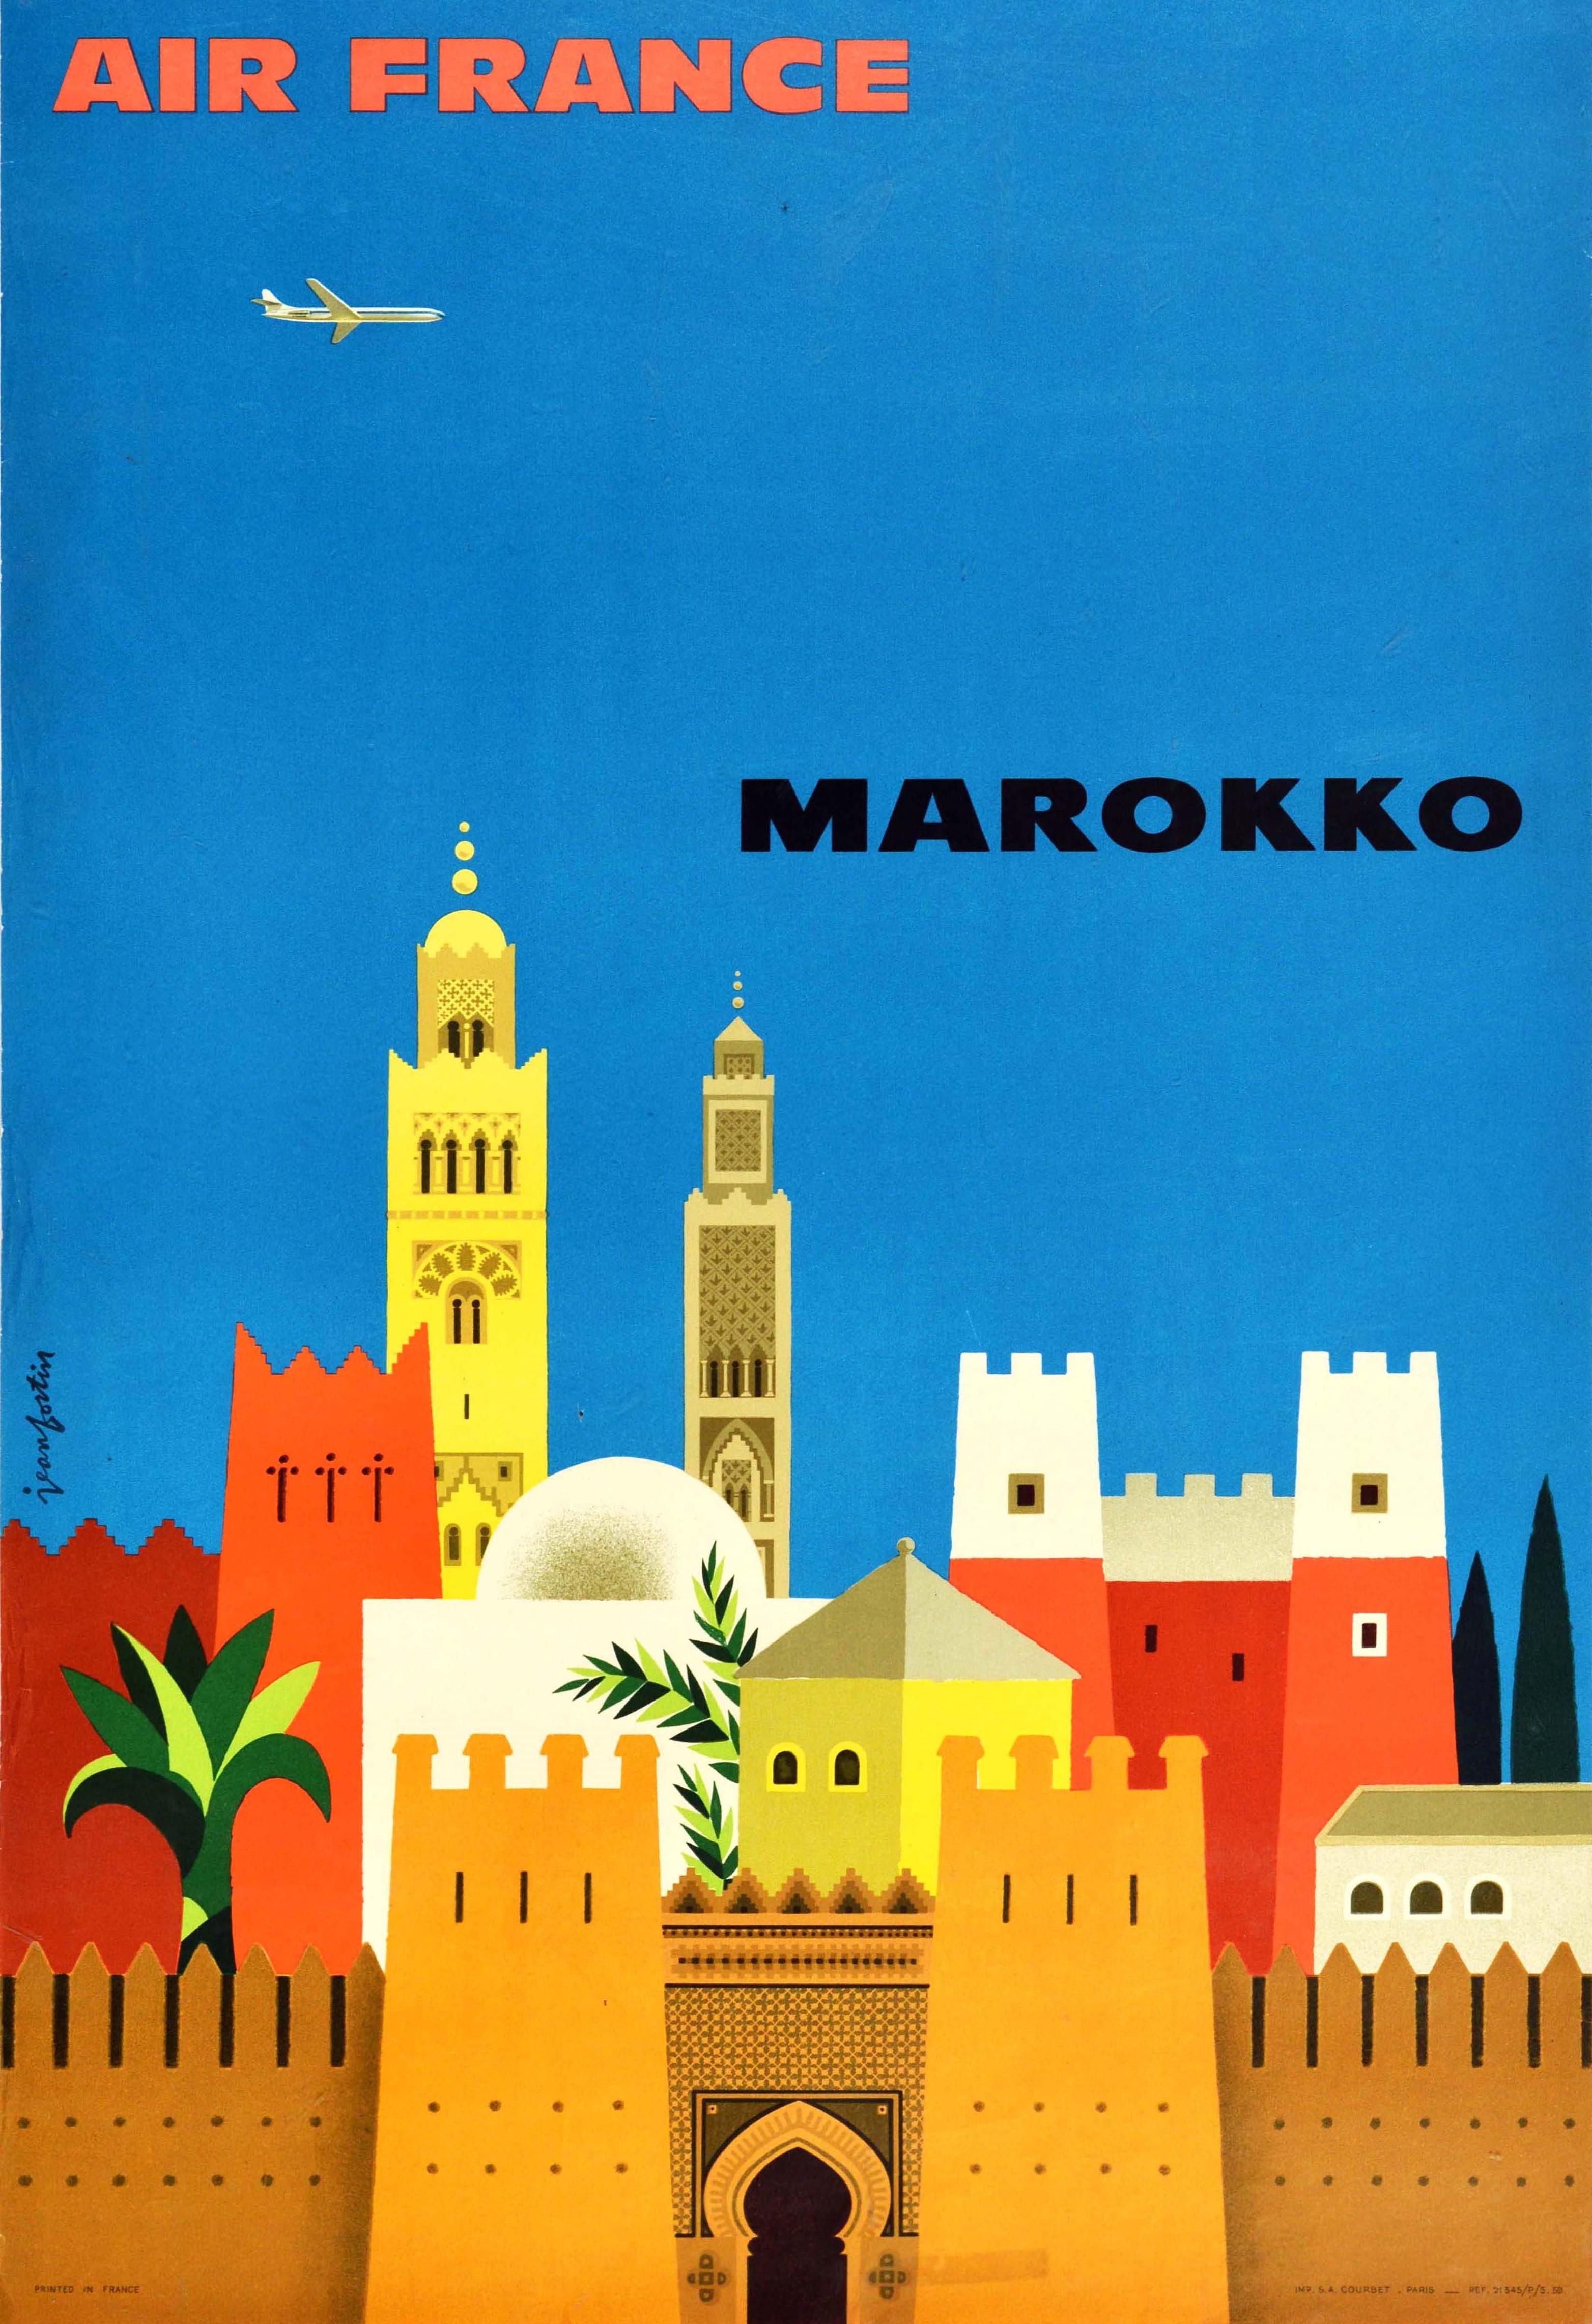 French Original Vintage Airline Travel Poster Air France Marokko Morocco North Africa